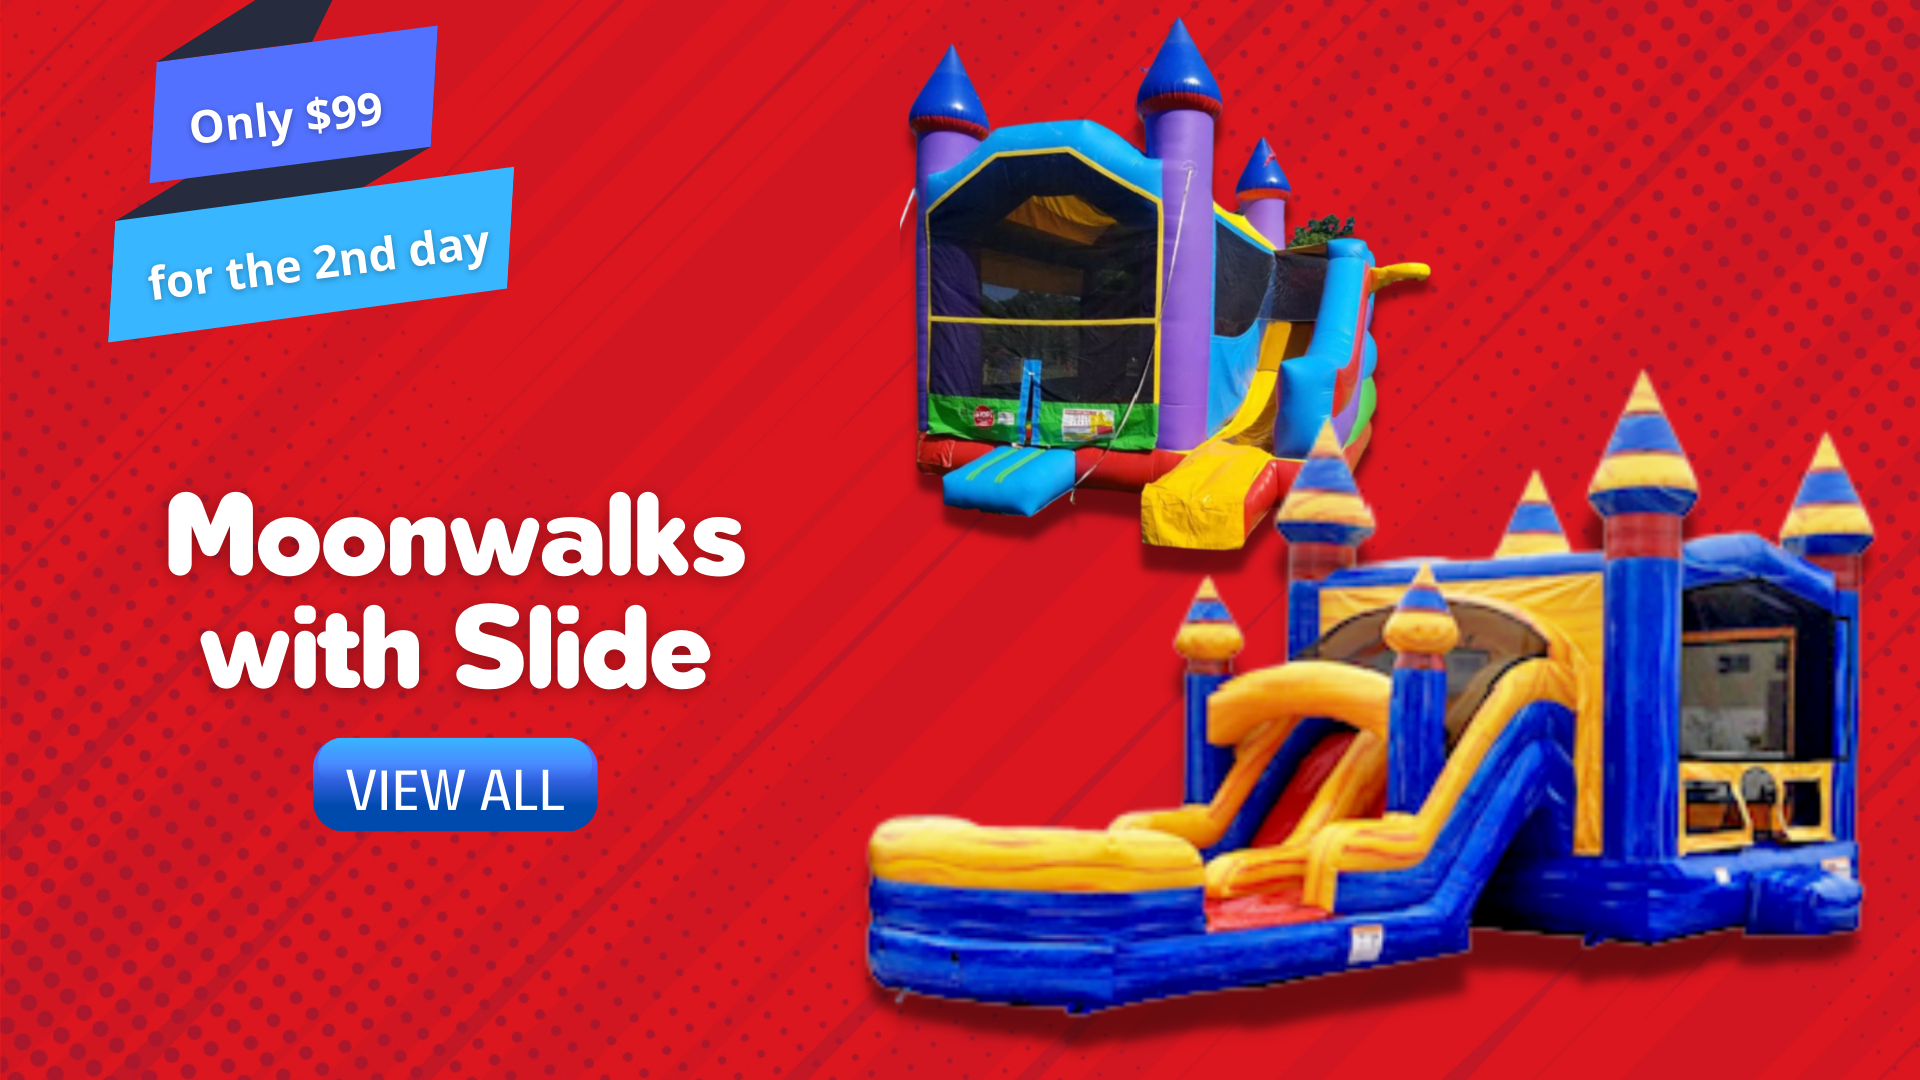 Jump City Inflatable Moonwalks with Slide Rentals